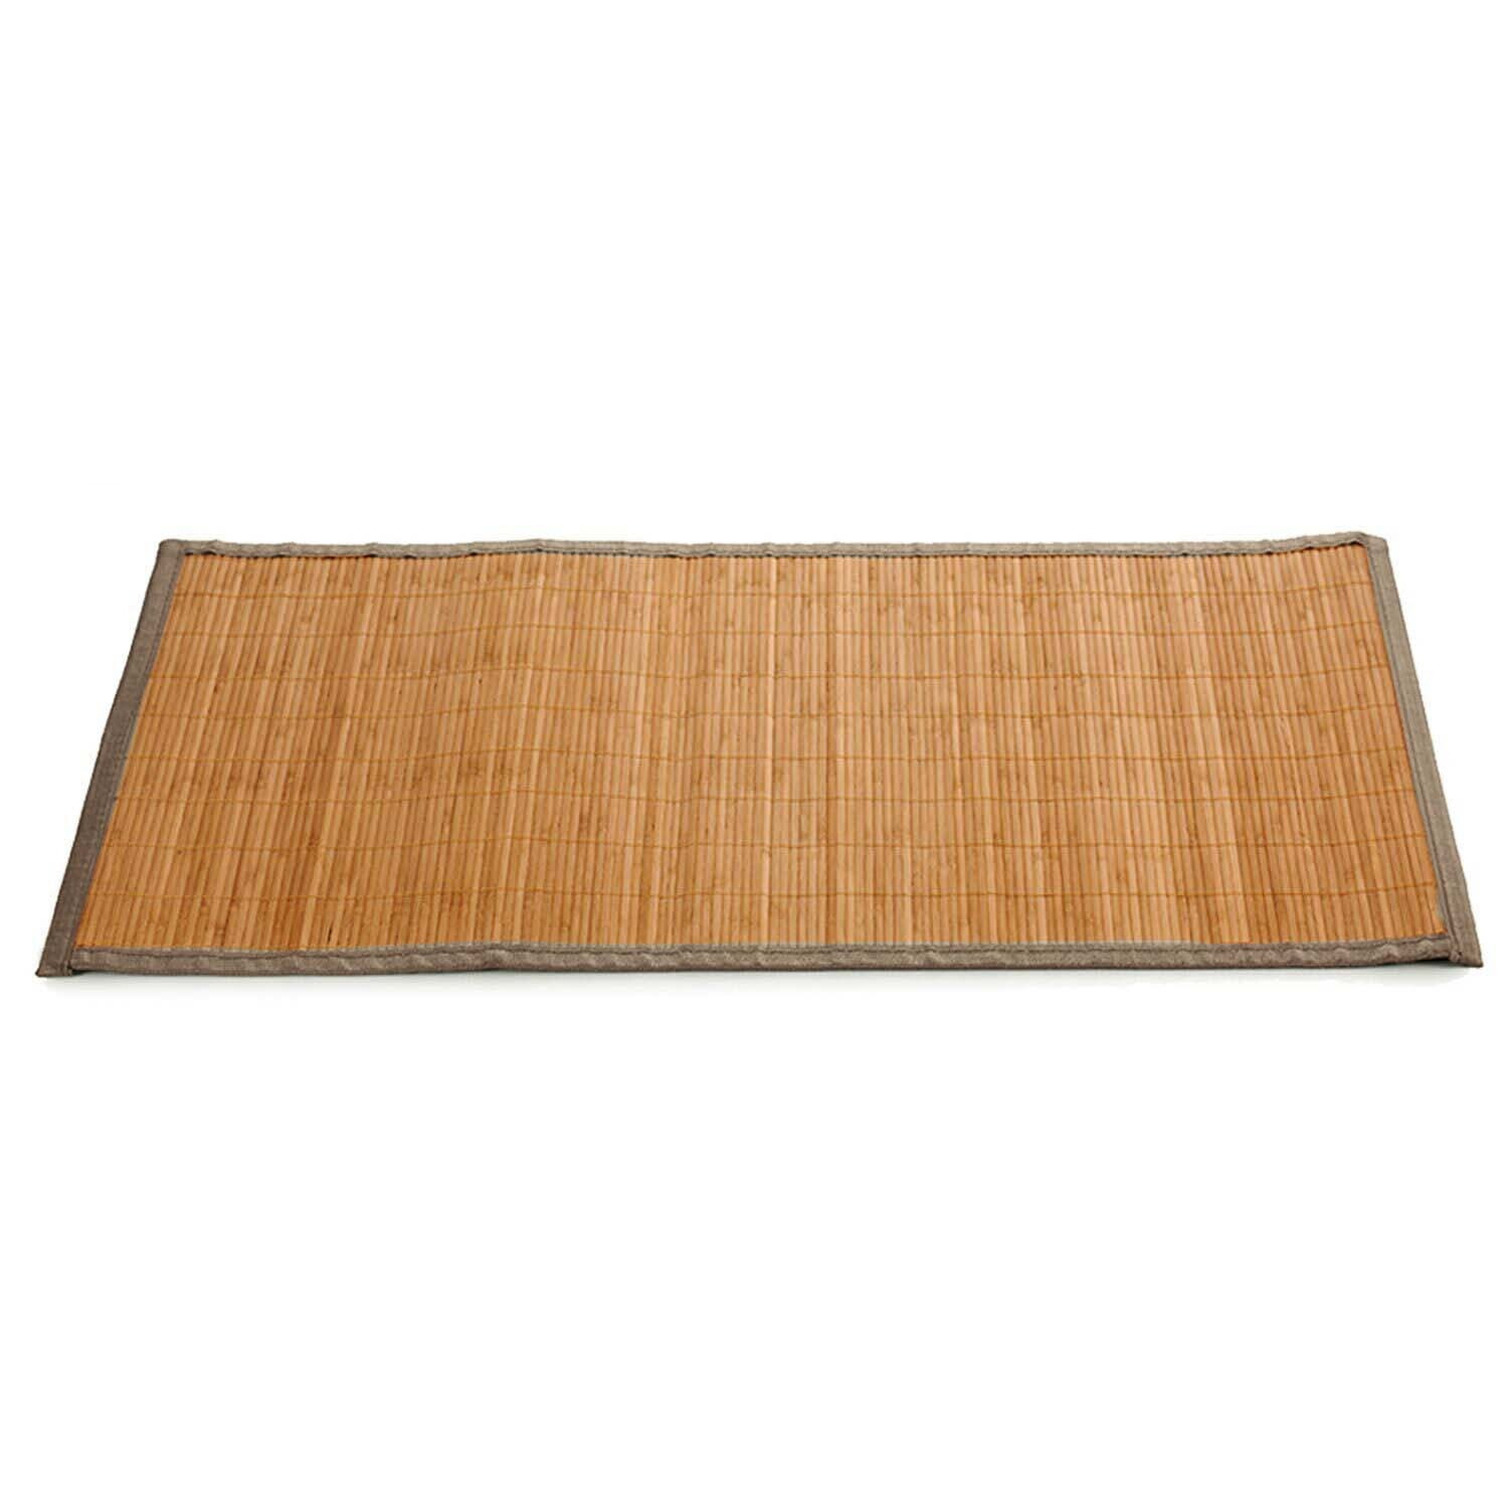 Badkamer vloermat anti-slip donkere bamboe 50 x 80 cm met grijze rand